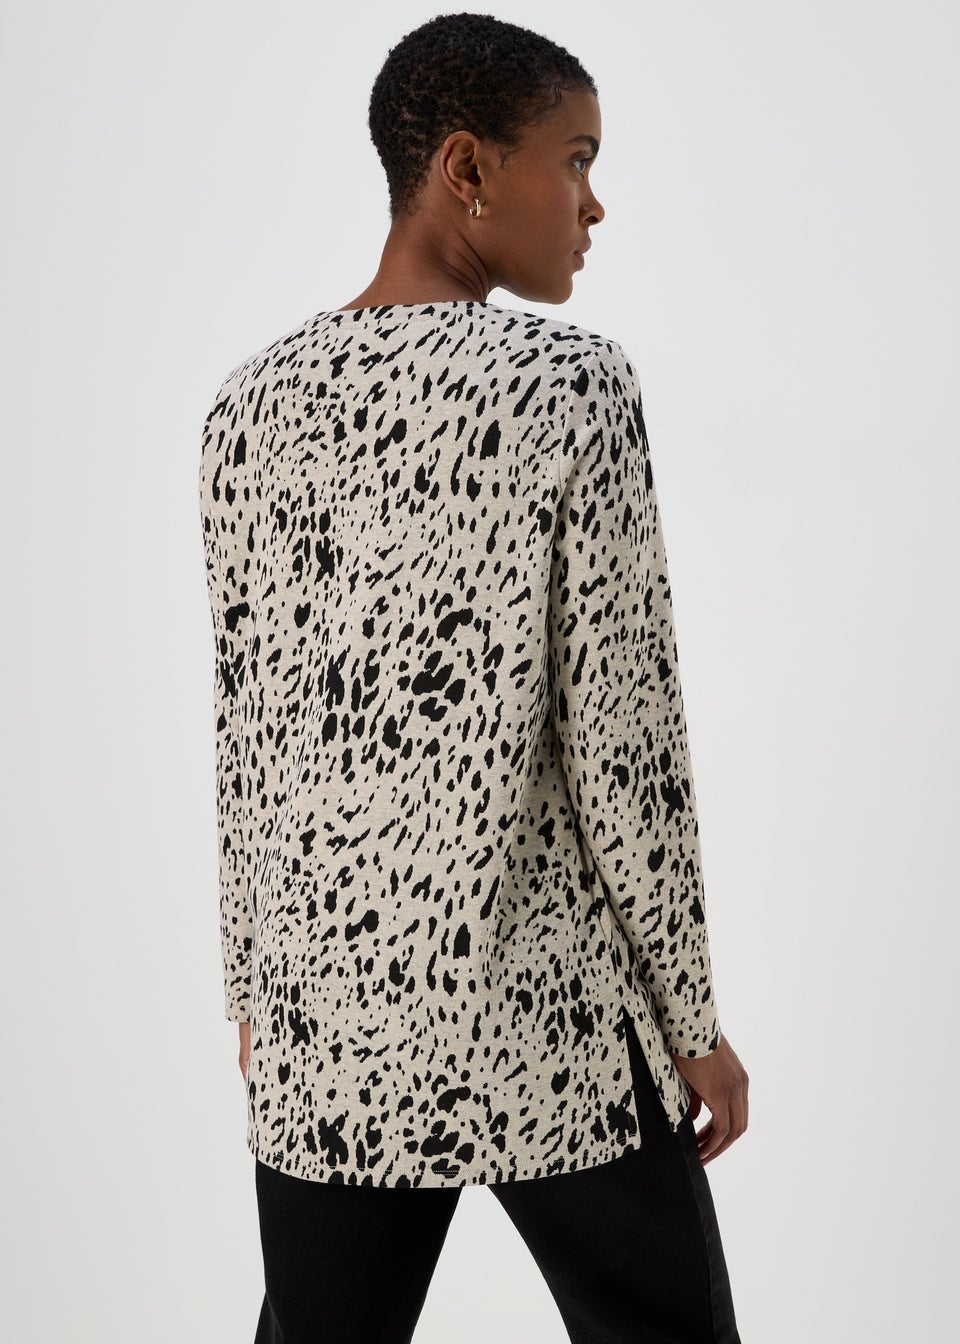 Monochrome Jacquard Leopard Print Tunic